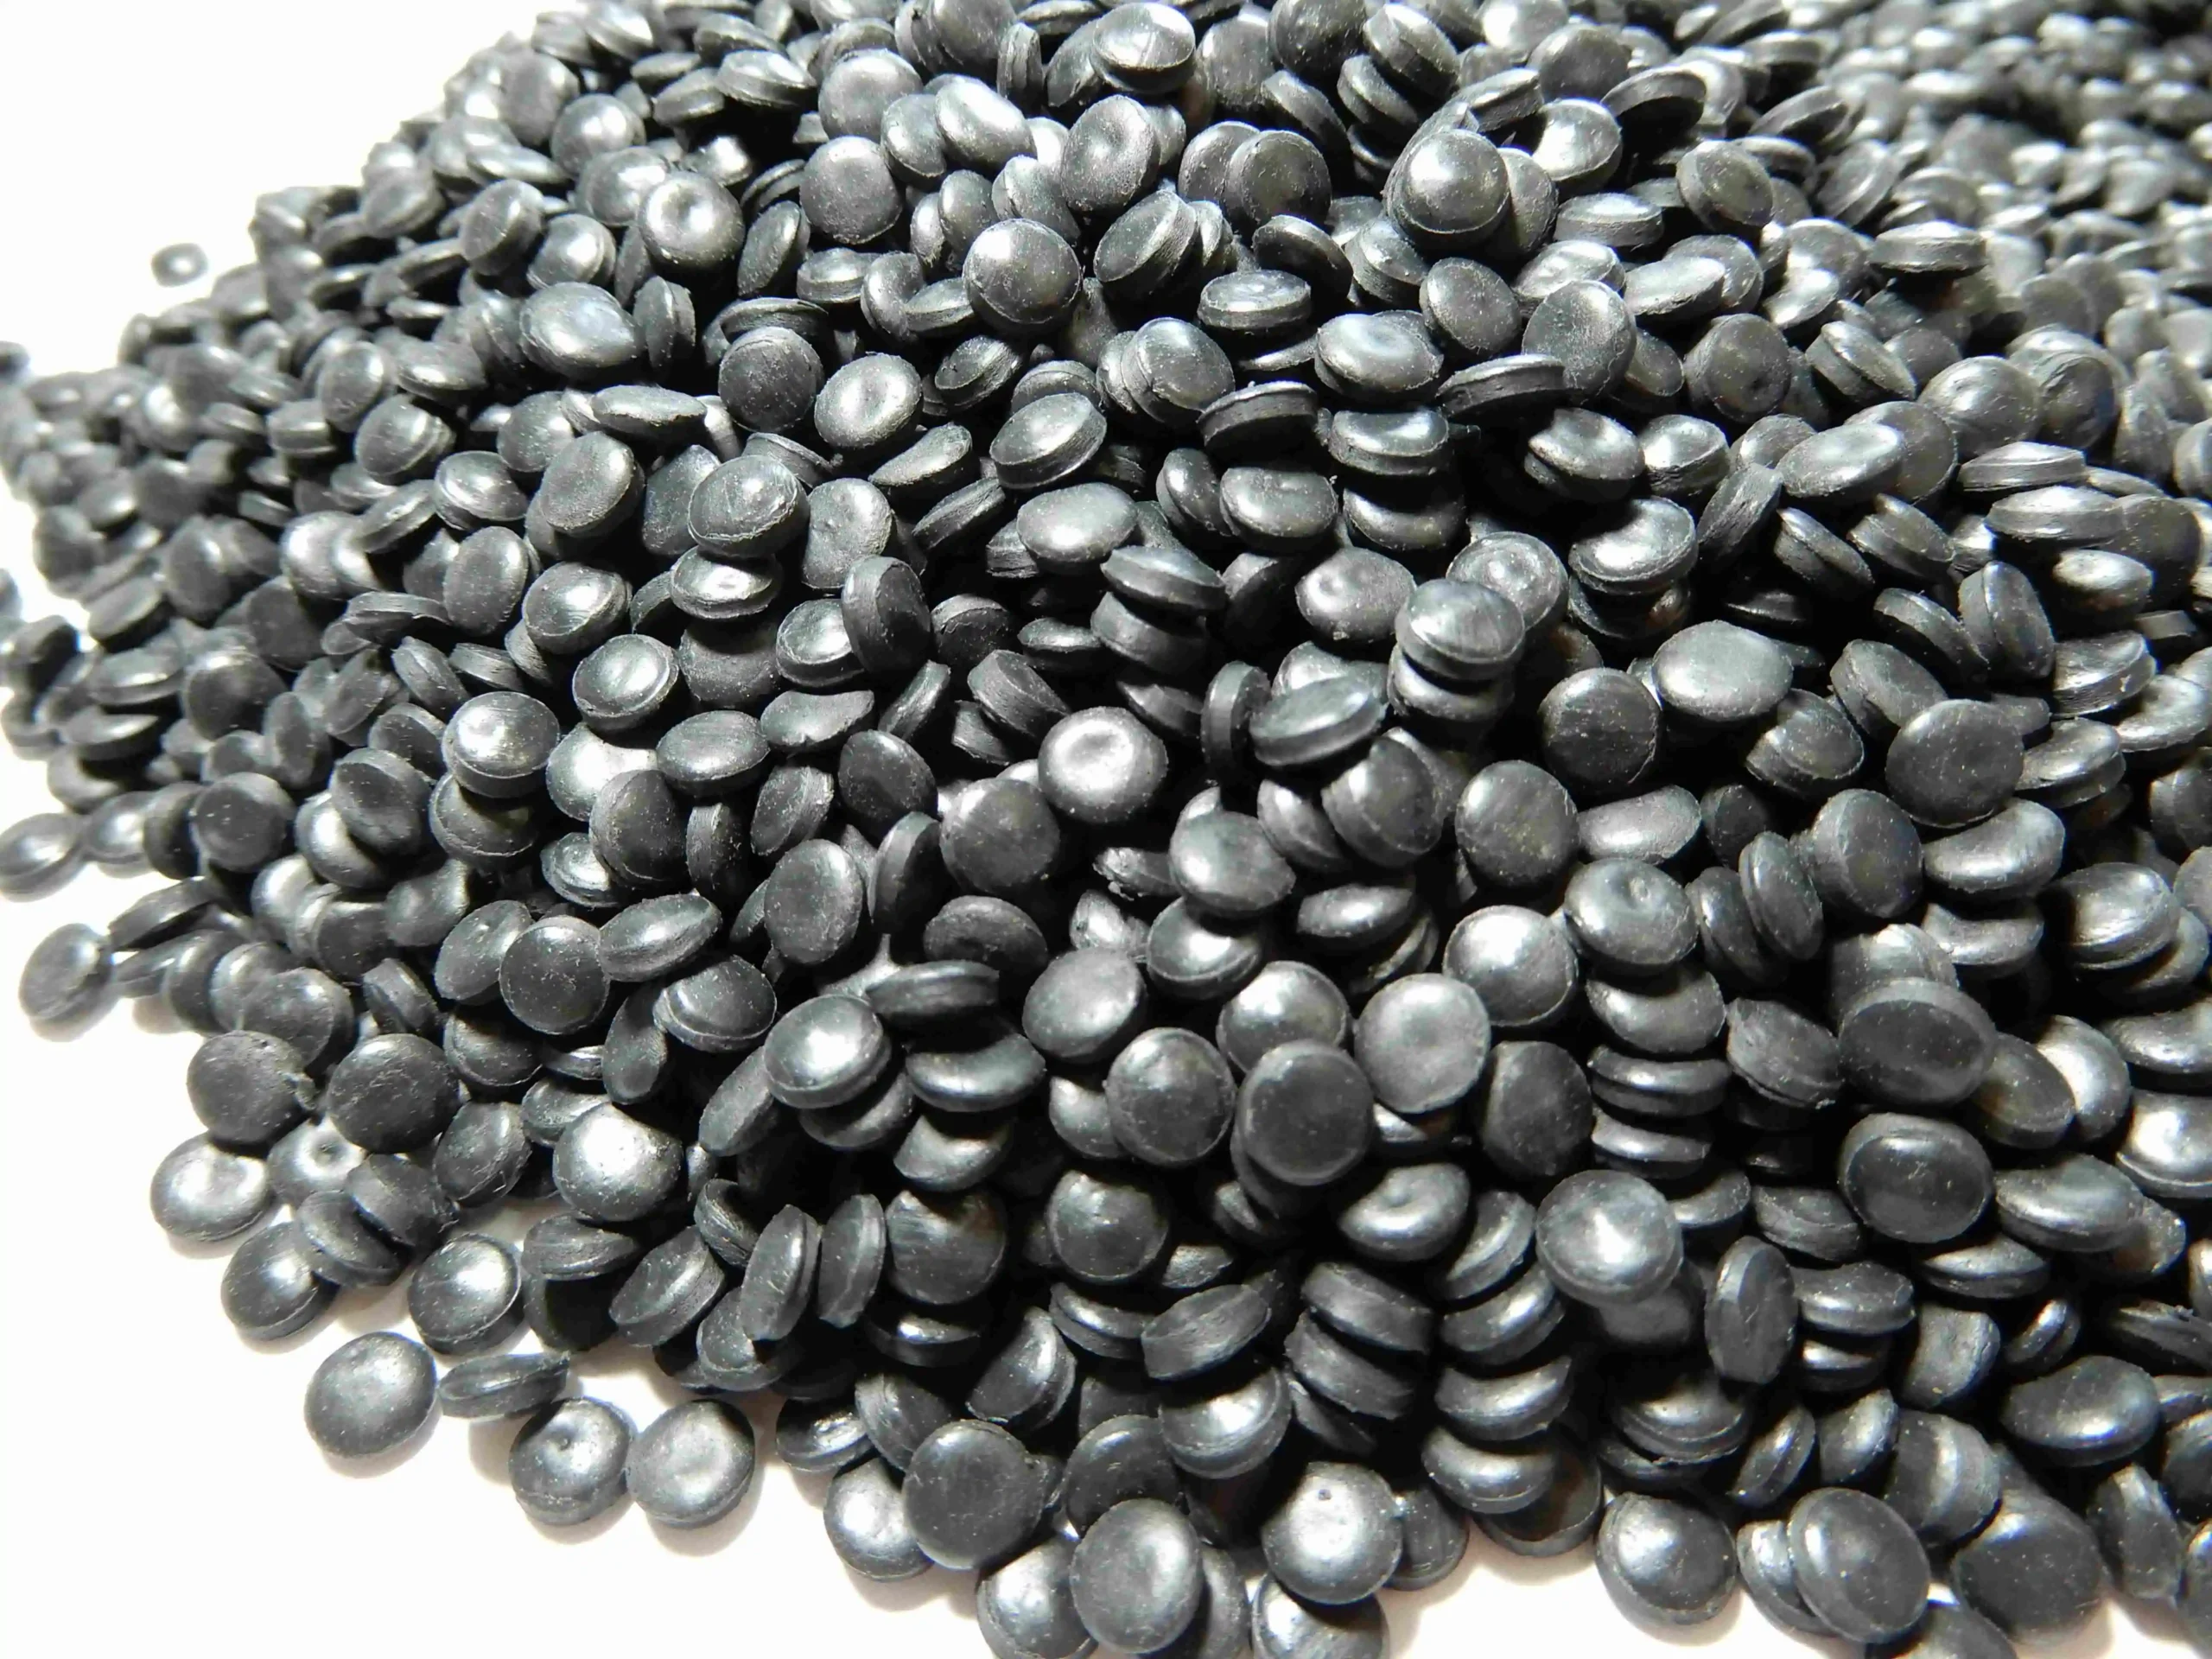 LDPE pellets black